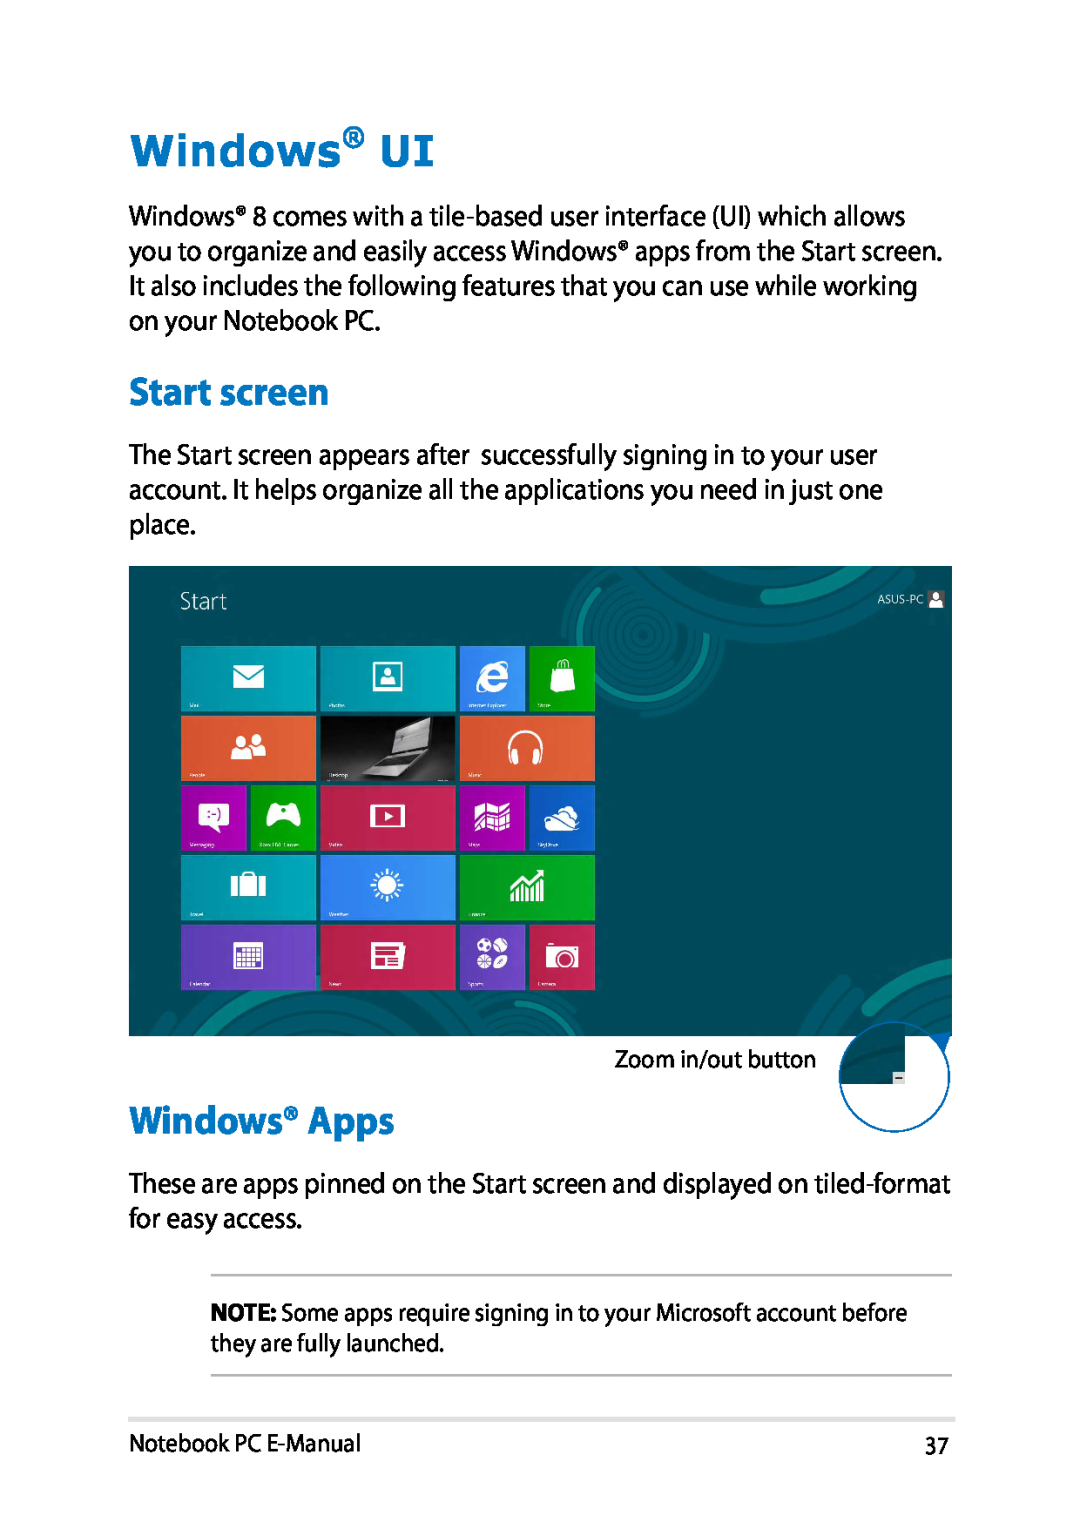 Asus E8438 manual Windows UI, Start screen, Windows Apps 